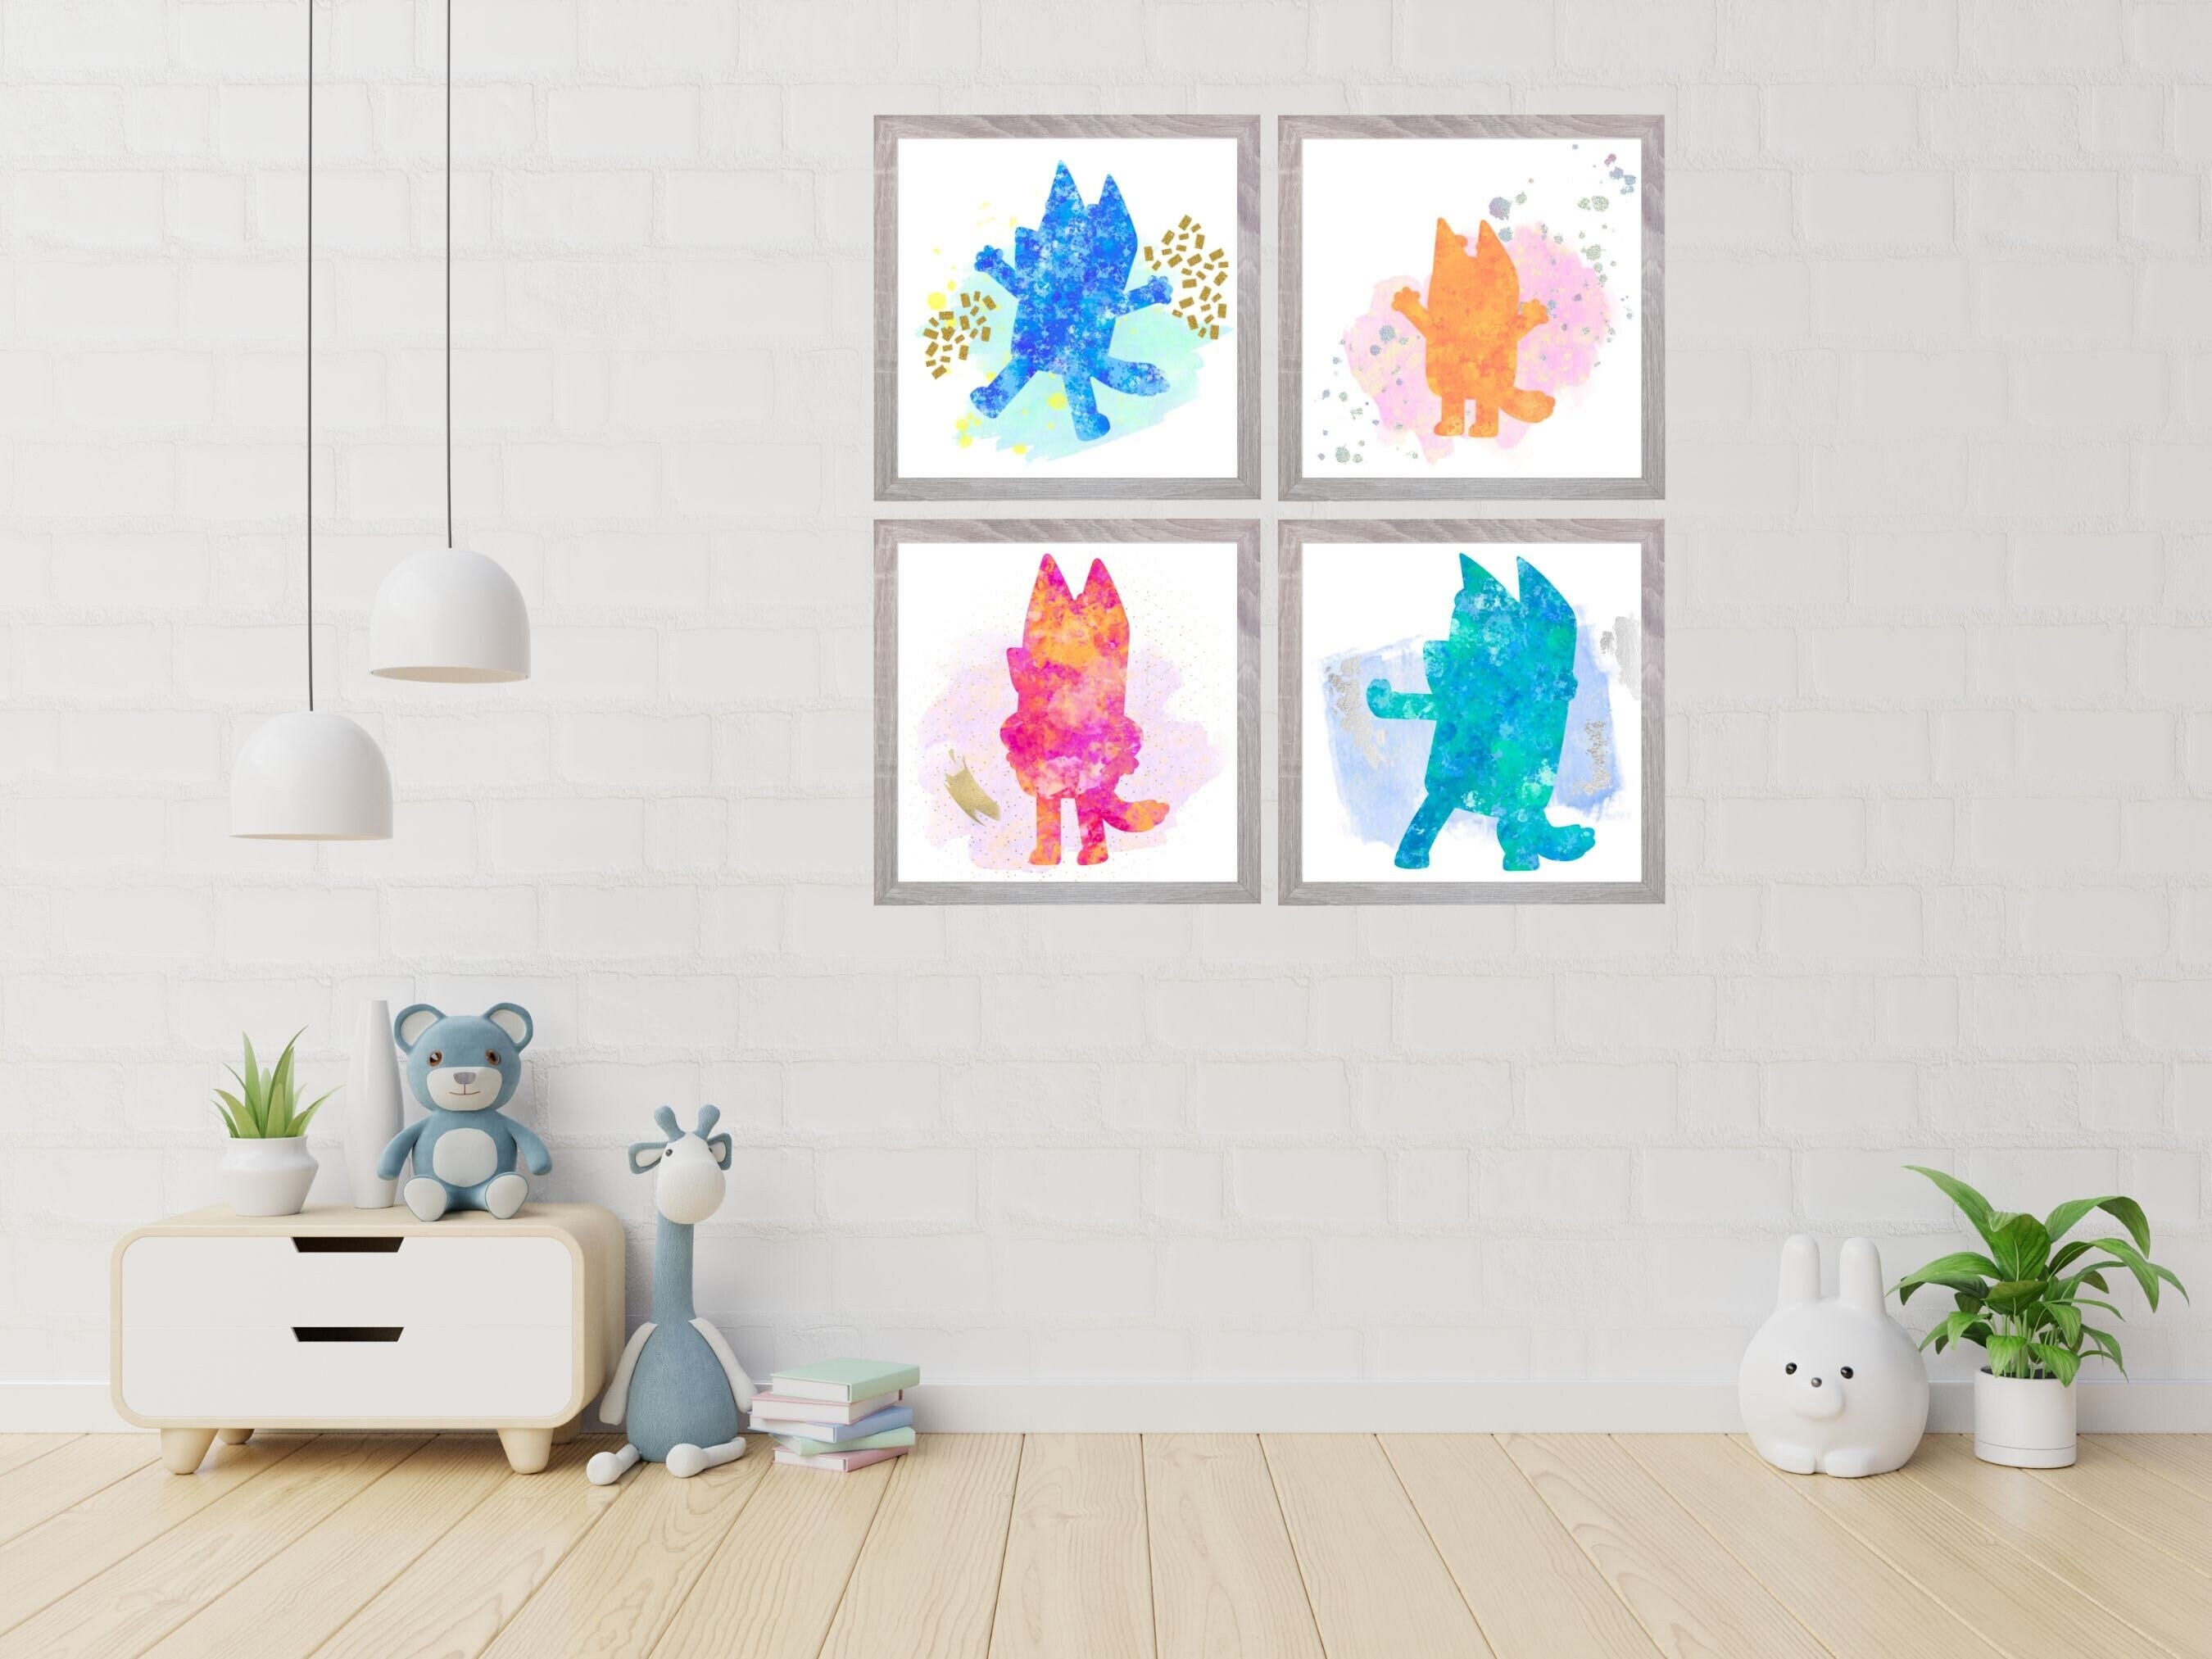 Bluey Wall Art  |  Digital Art Download  |  Baby, Nursery, Kids Room  |  4 Printables  |  Bluey, Bingo, Chilli, Bandit